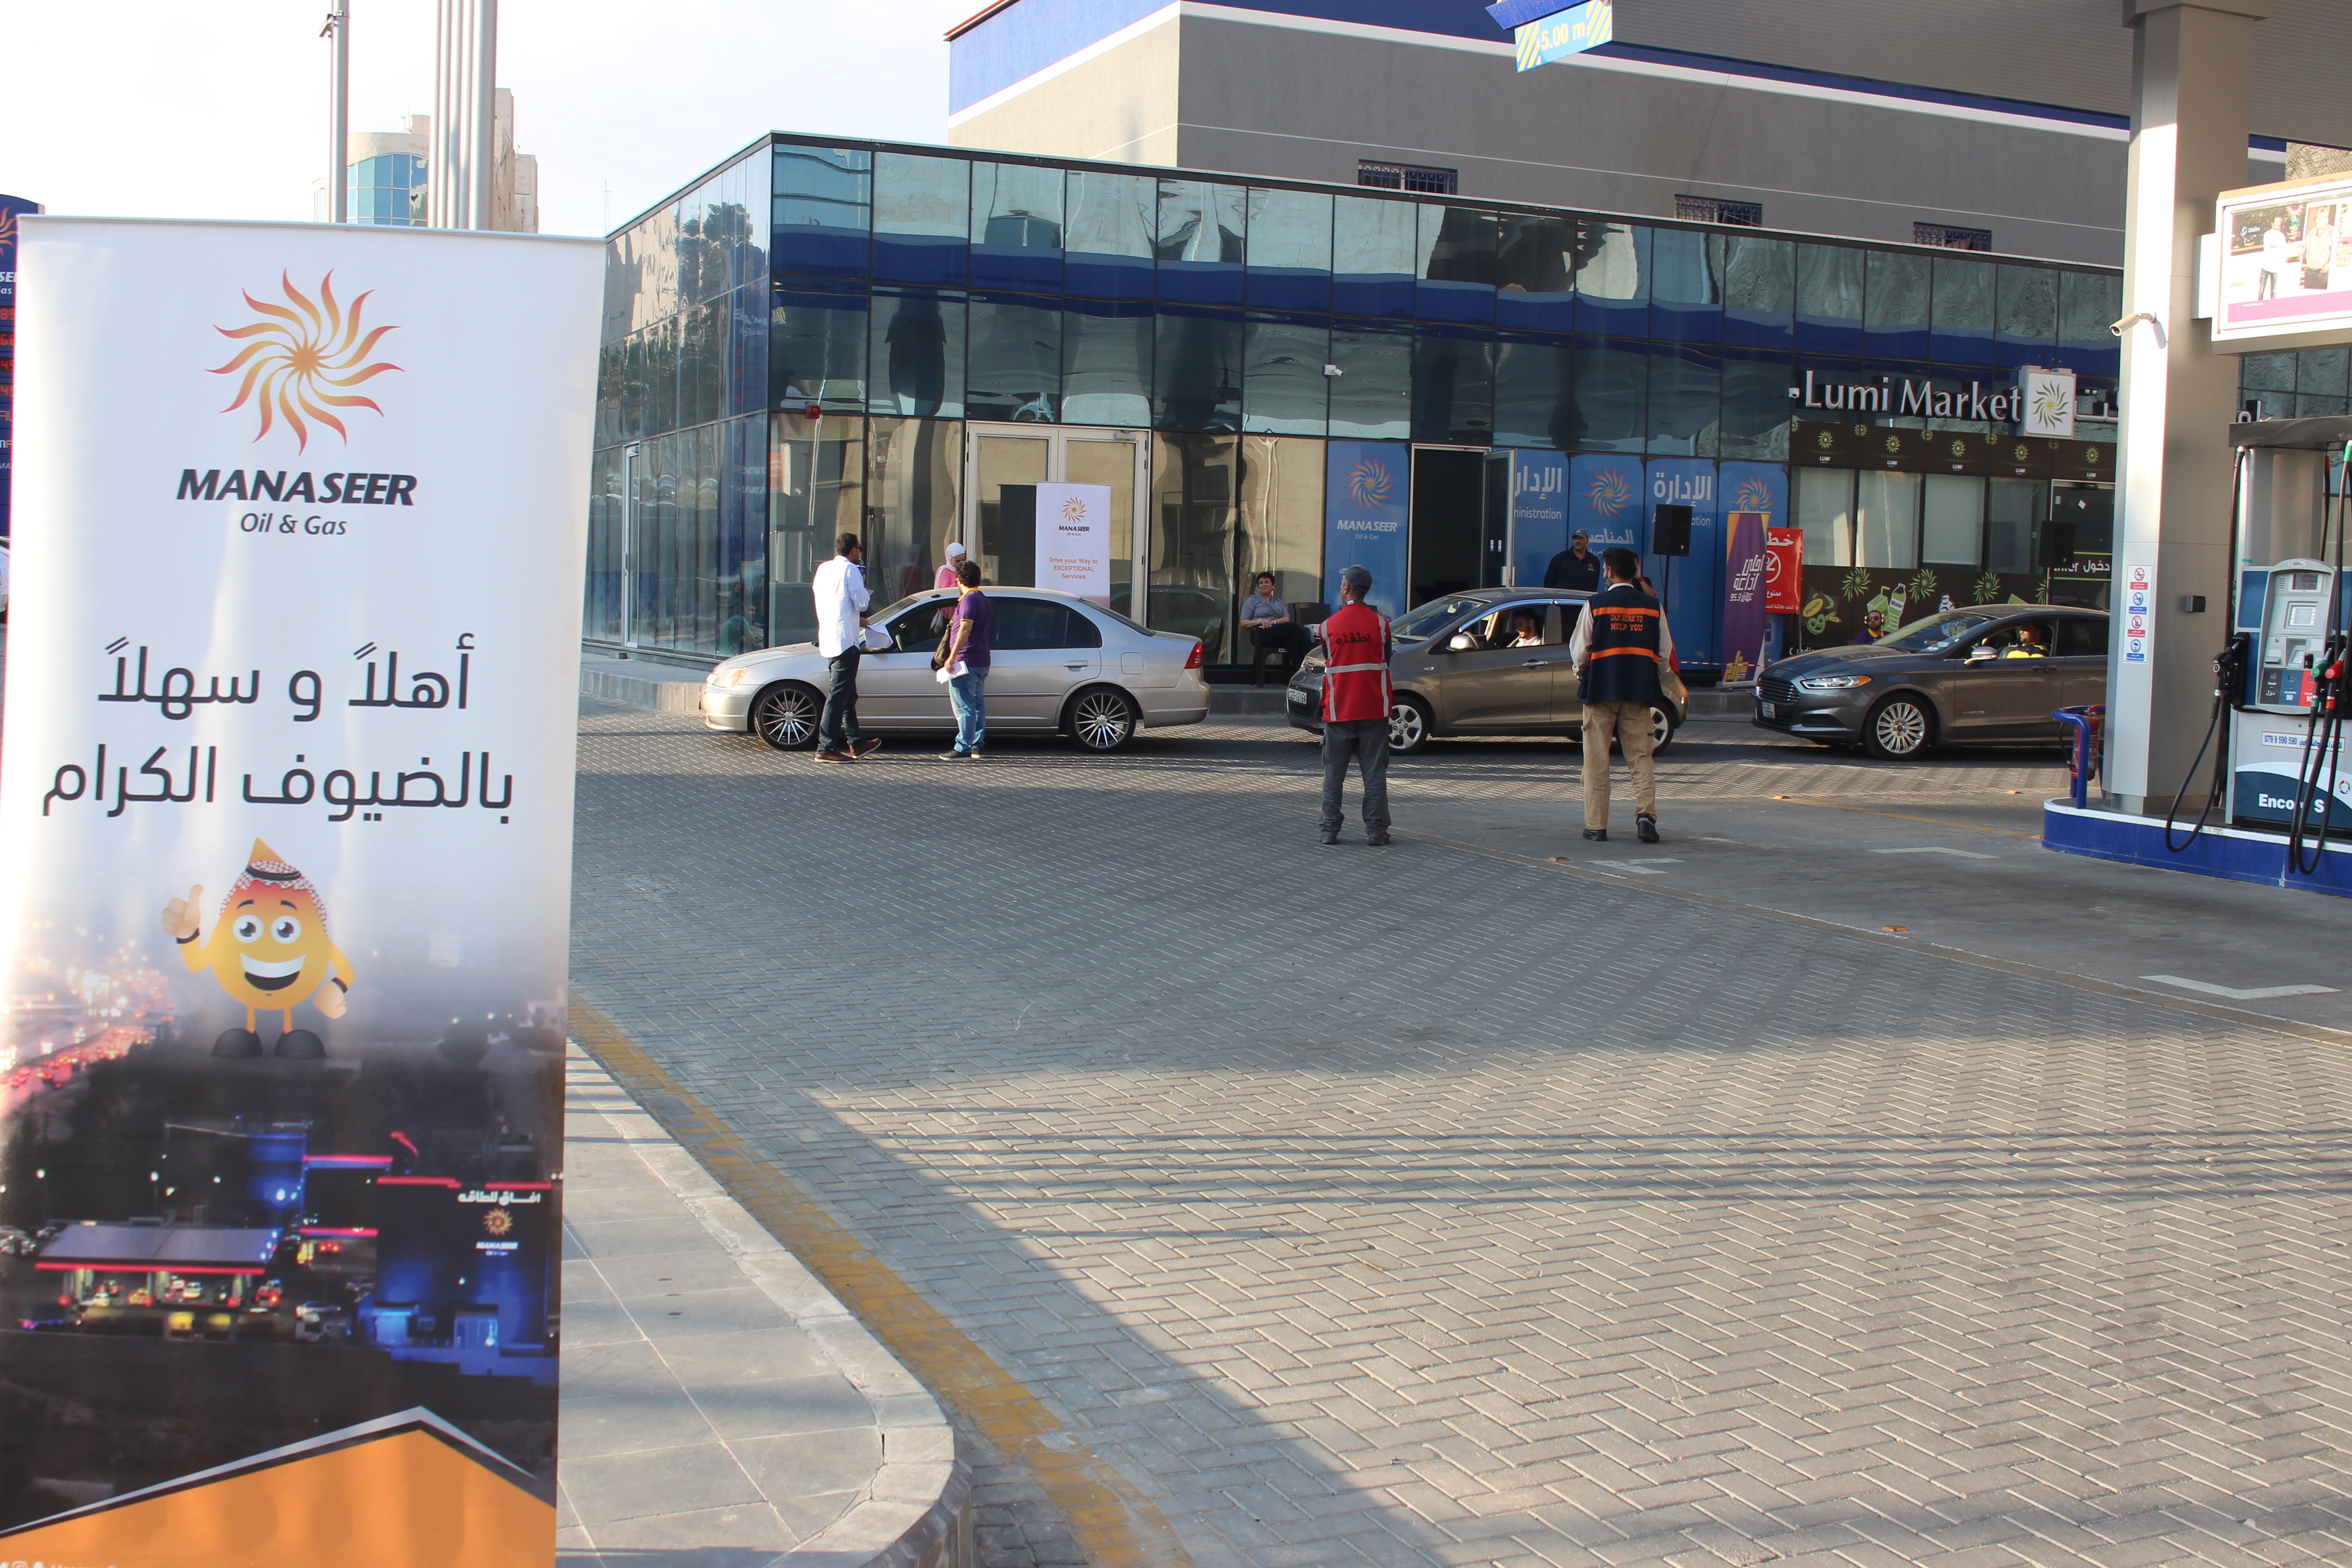 Manaseer Oil & Gas organize a marketing campaign in Wadi Saqra station